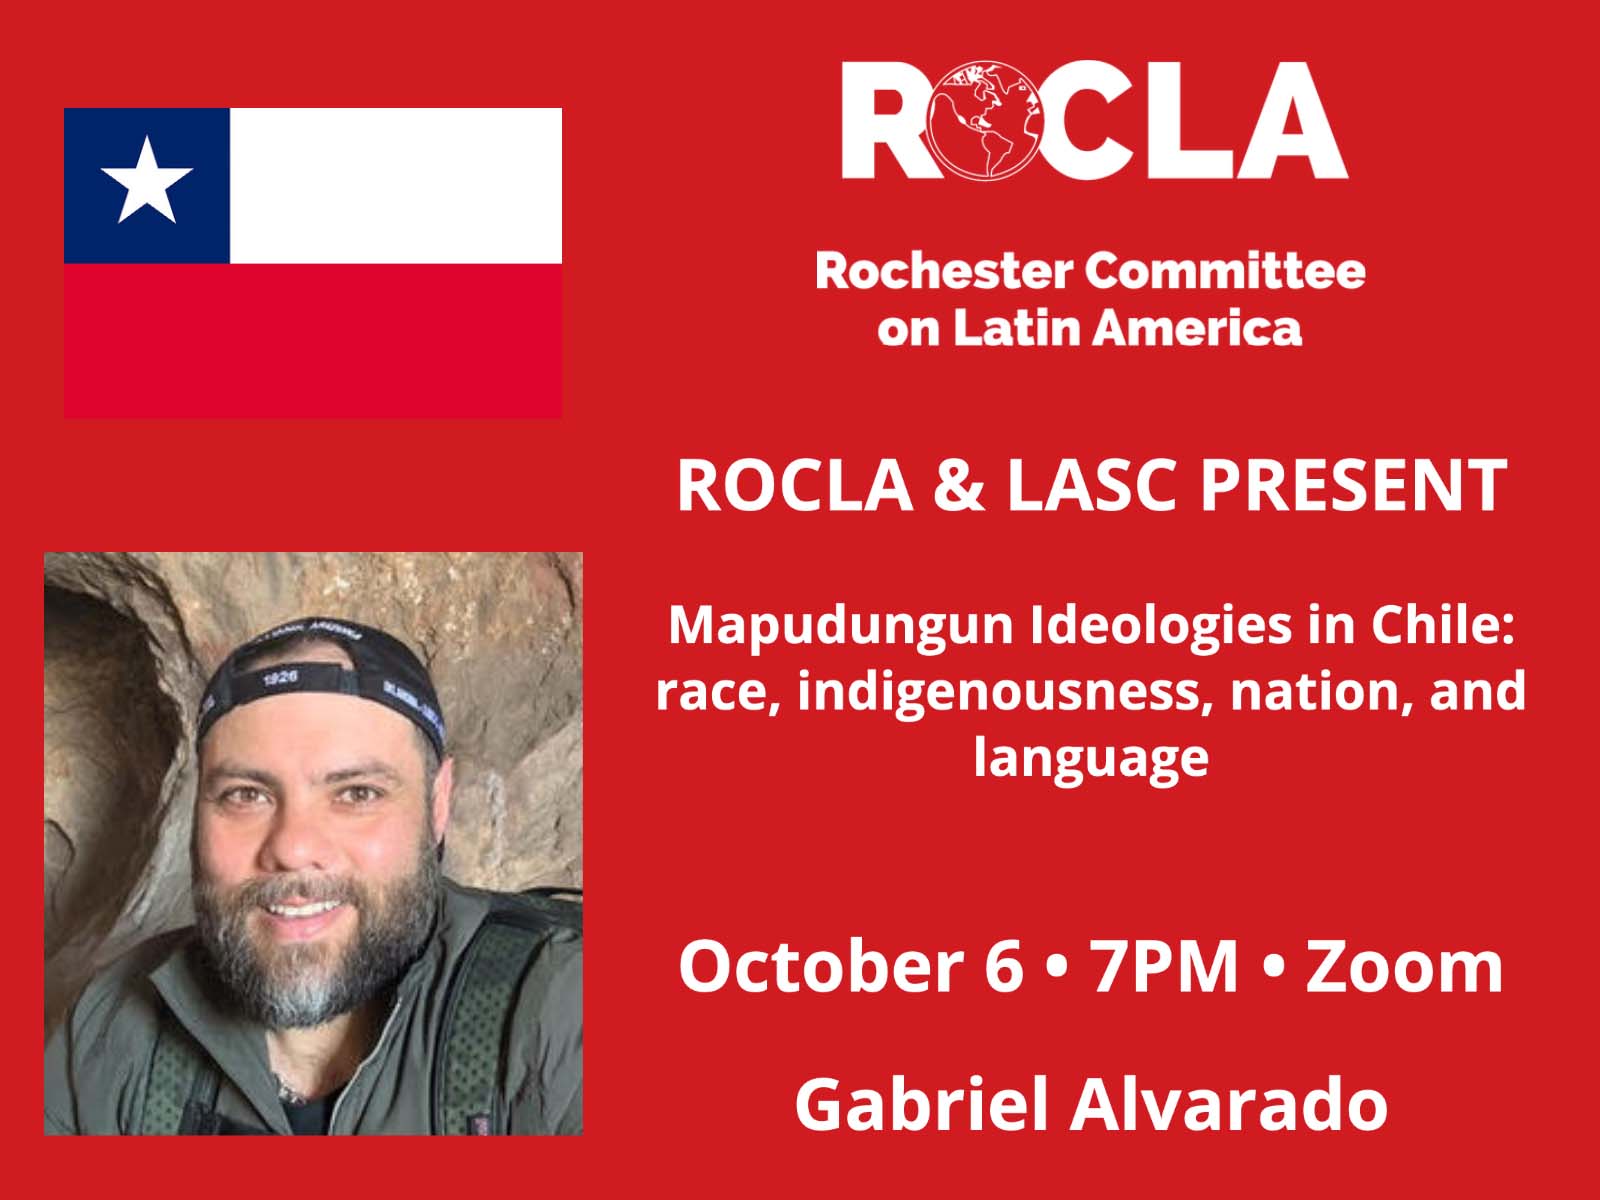 Mapudungun Ideologies in Chile: race, indigenousness, nation, and language - Gabriel Alvorado Oct 6 2021 7pm